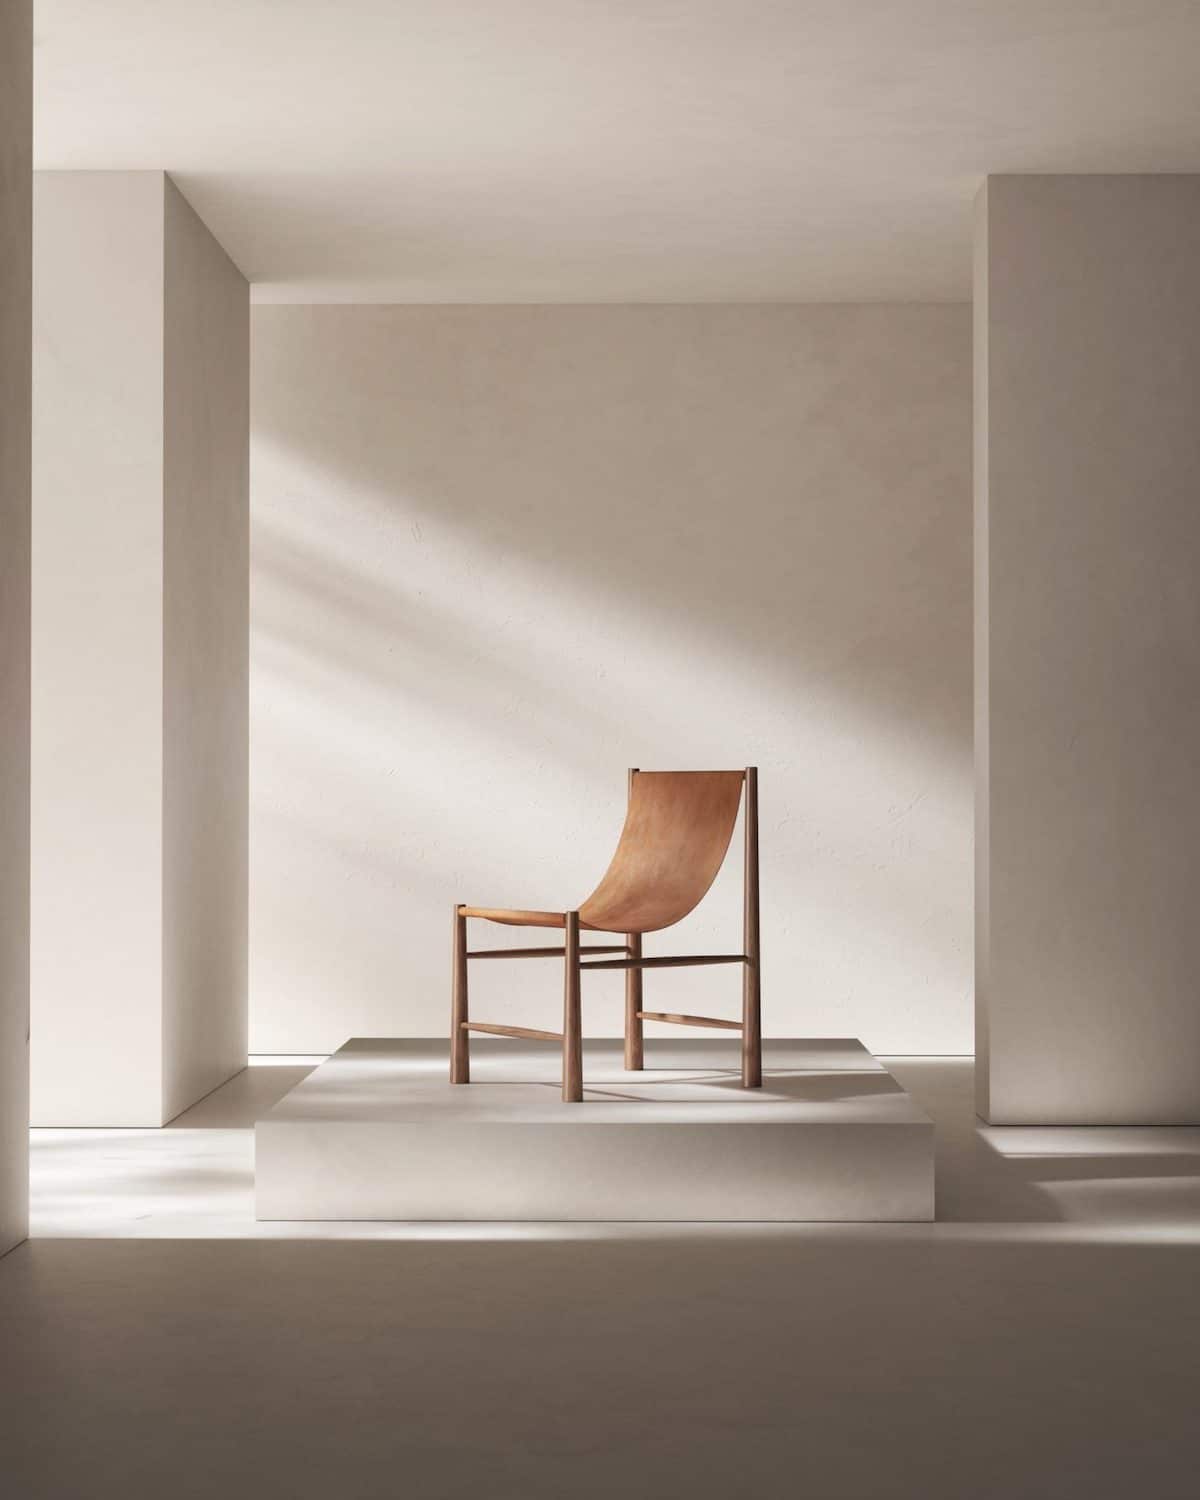 Chair in Interior Rendering by Sébastien Baert